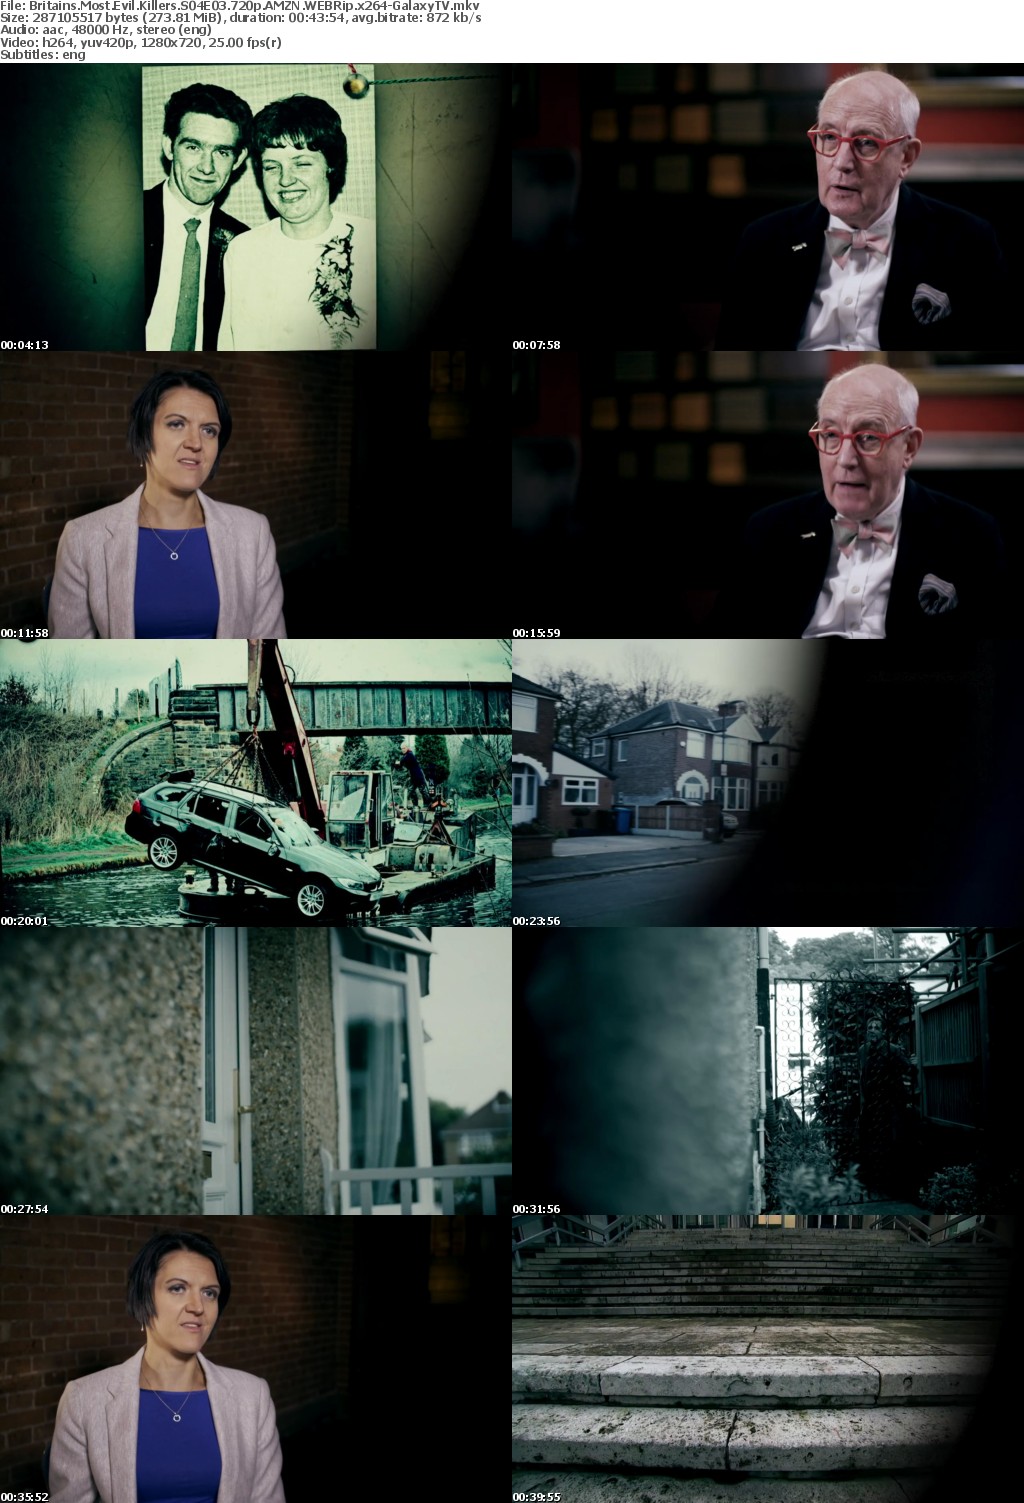 Britains Most Evil Killers S04 COMPLETE 720p AMZN WEBRip x264-GalaxyTV